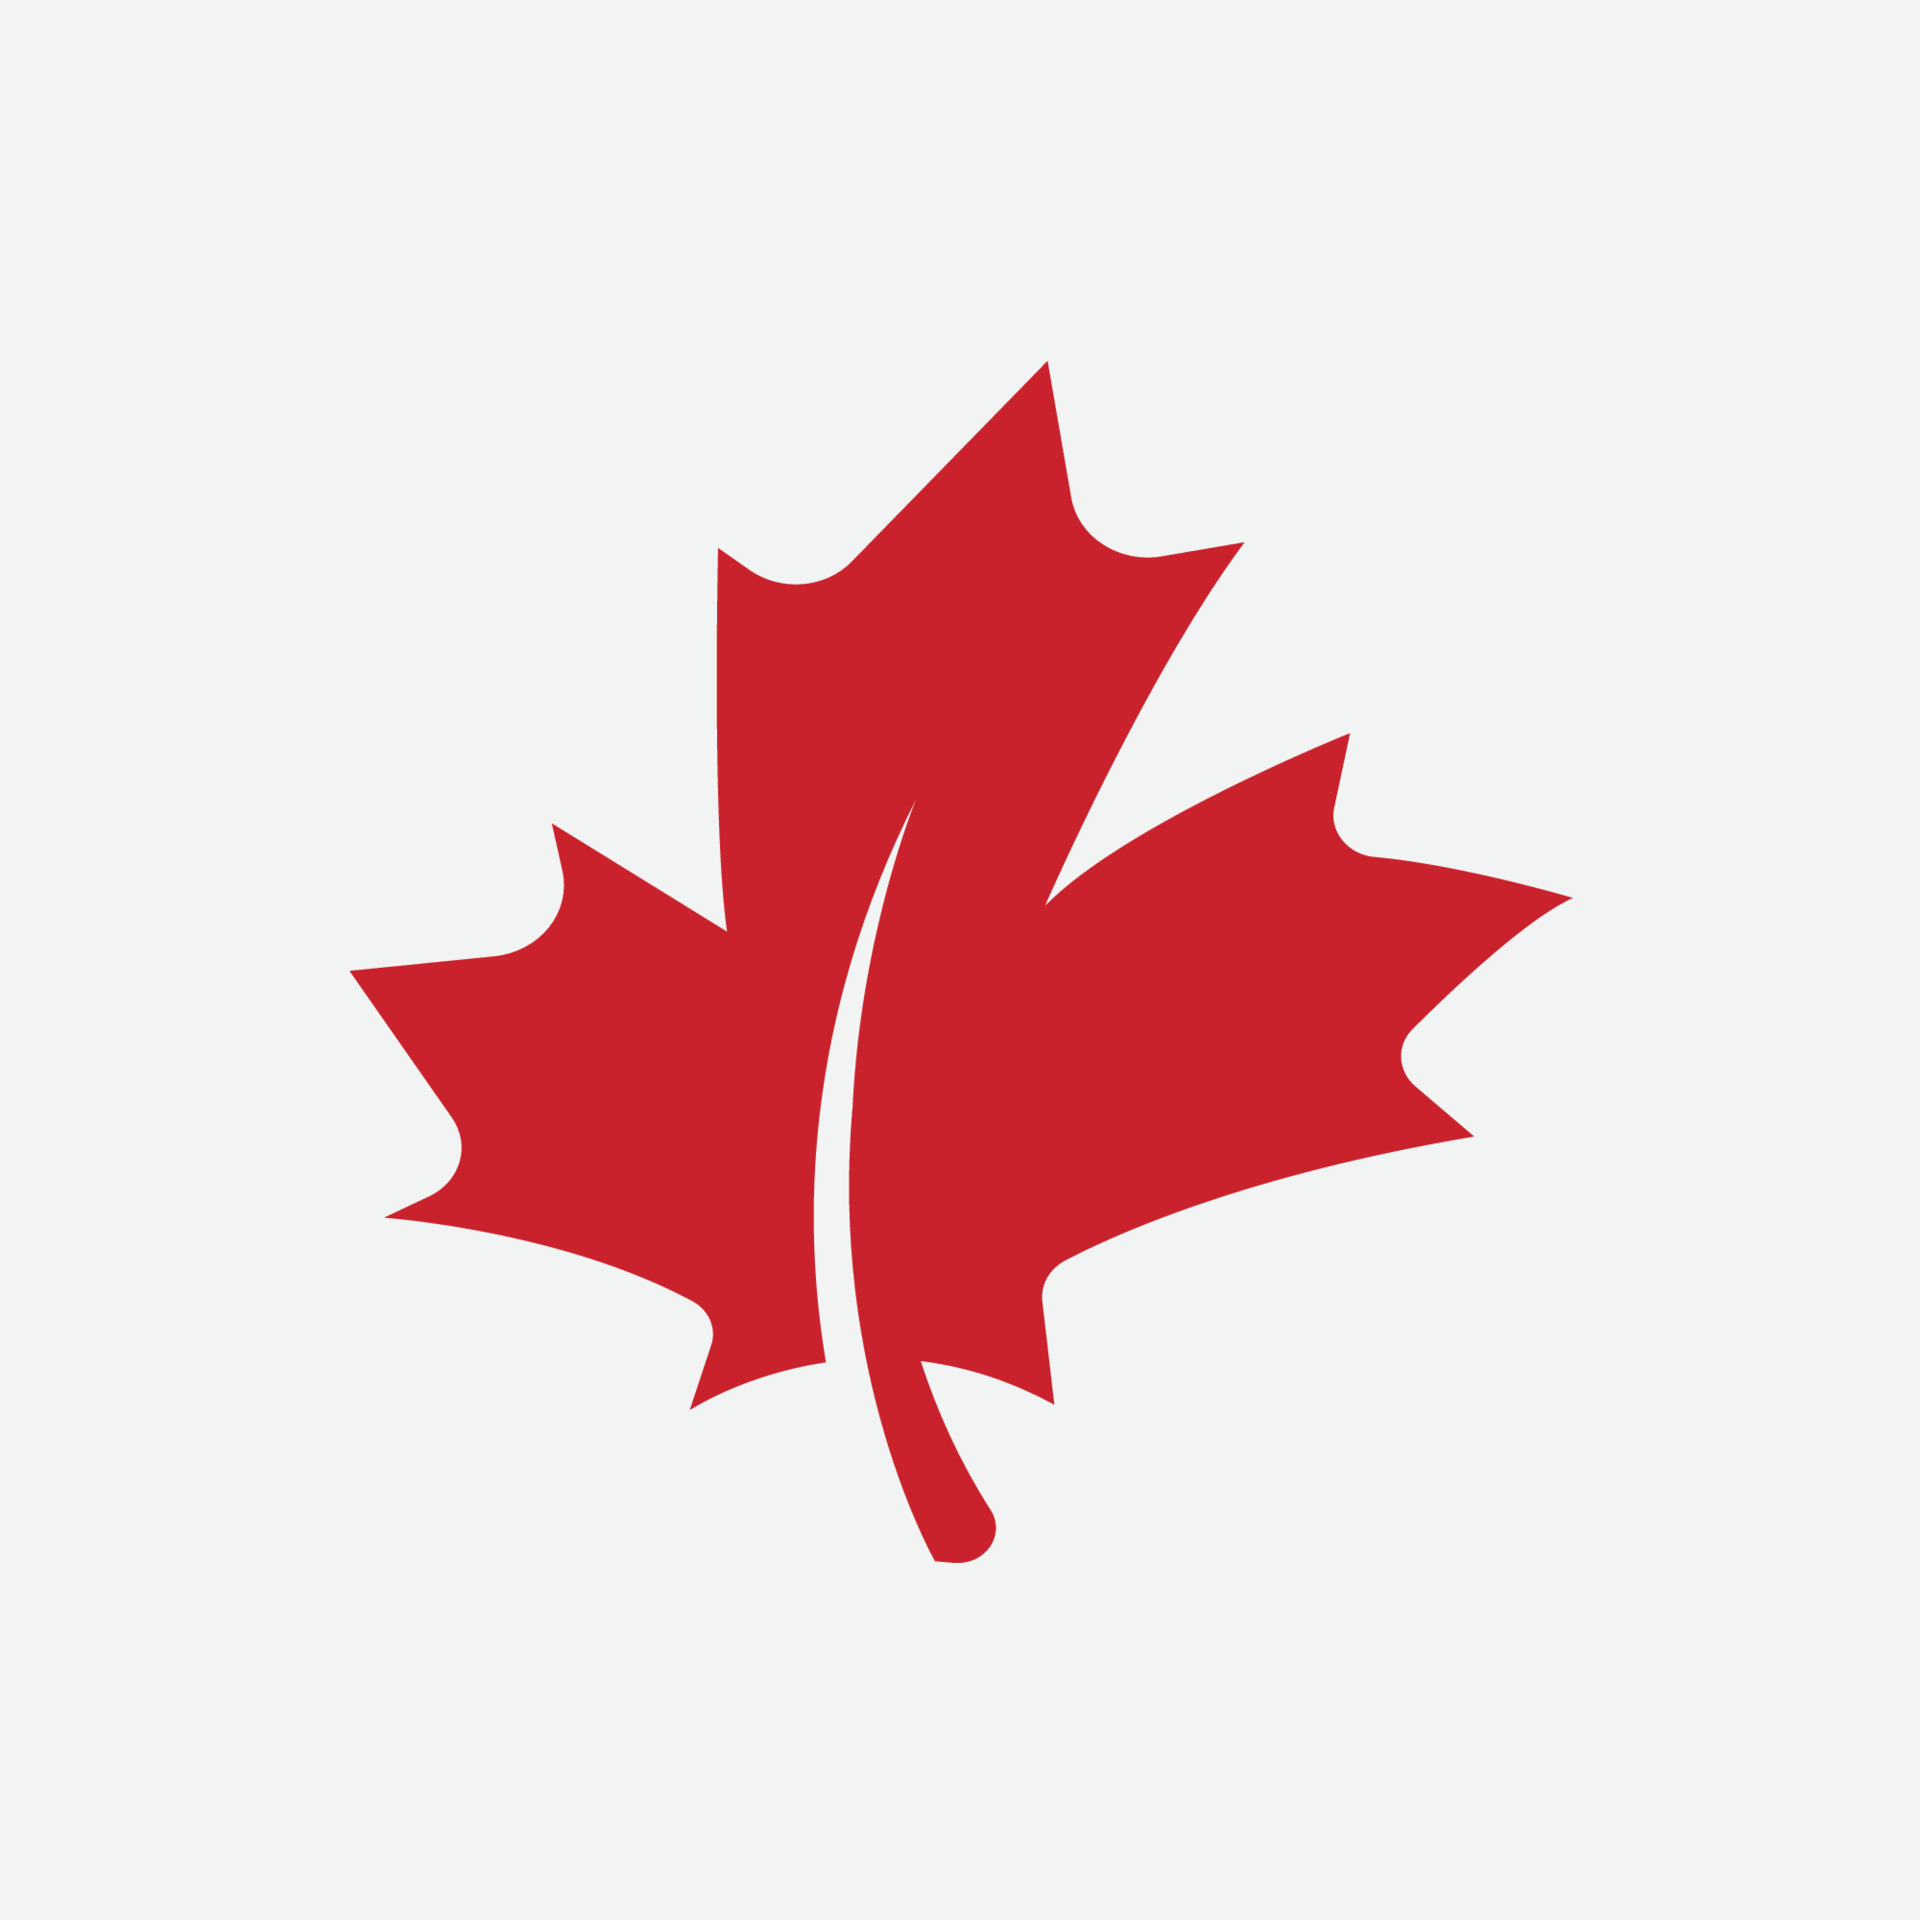 Maple leaf logo, Red maple leaf, Canada symbol, Red Canadian LeafMaple leaf logo template vector icon illustration, leaf vector illustration, Red maple, Canada symbol 15272235 Vector Art Vecteezy